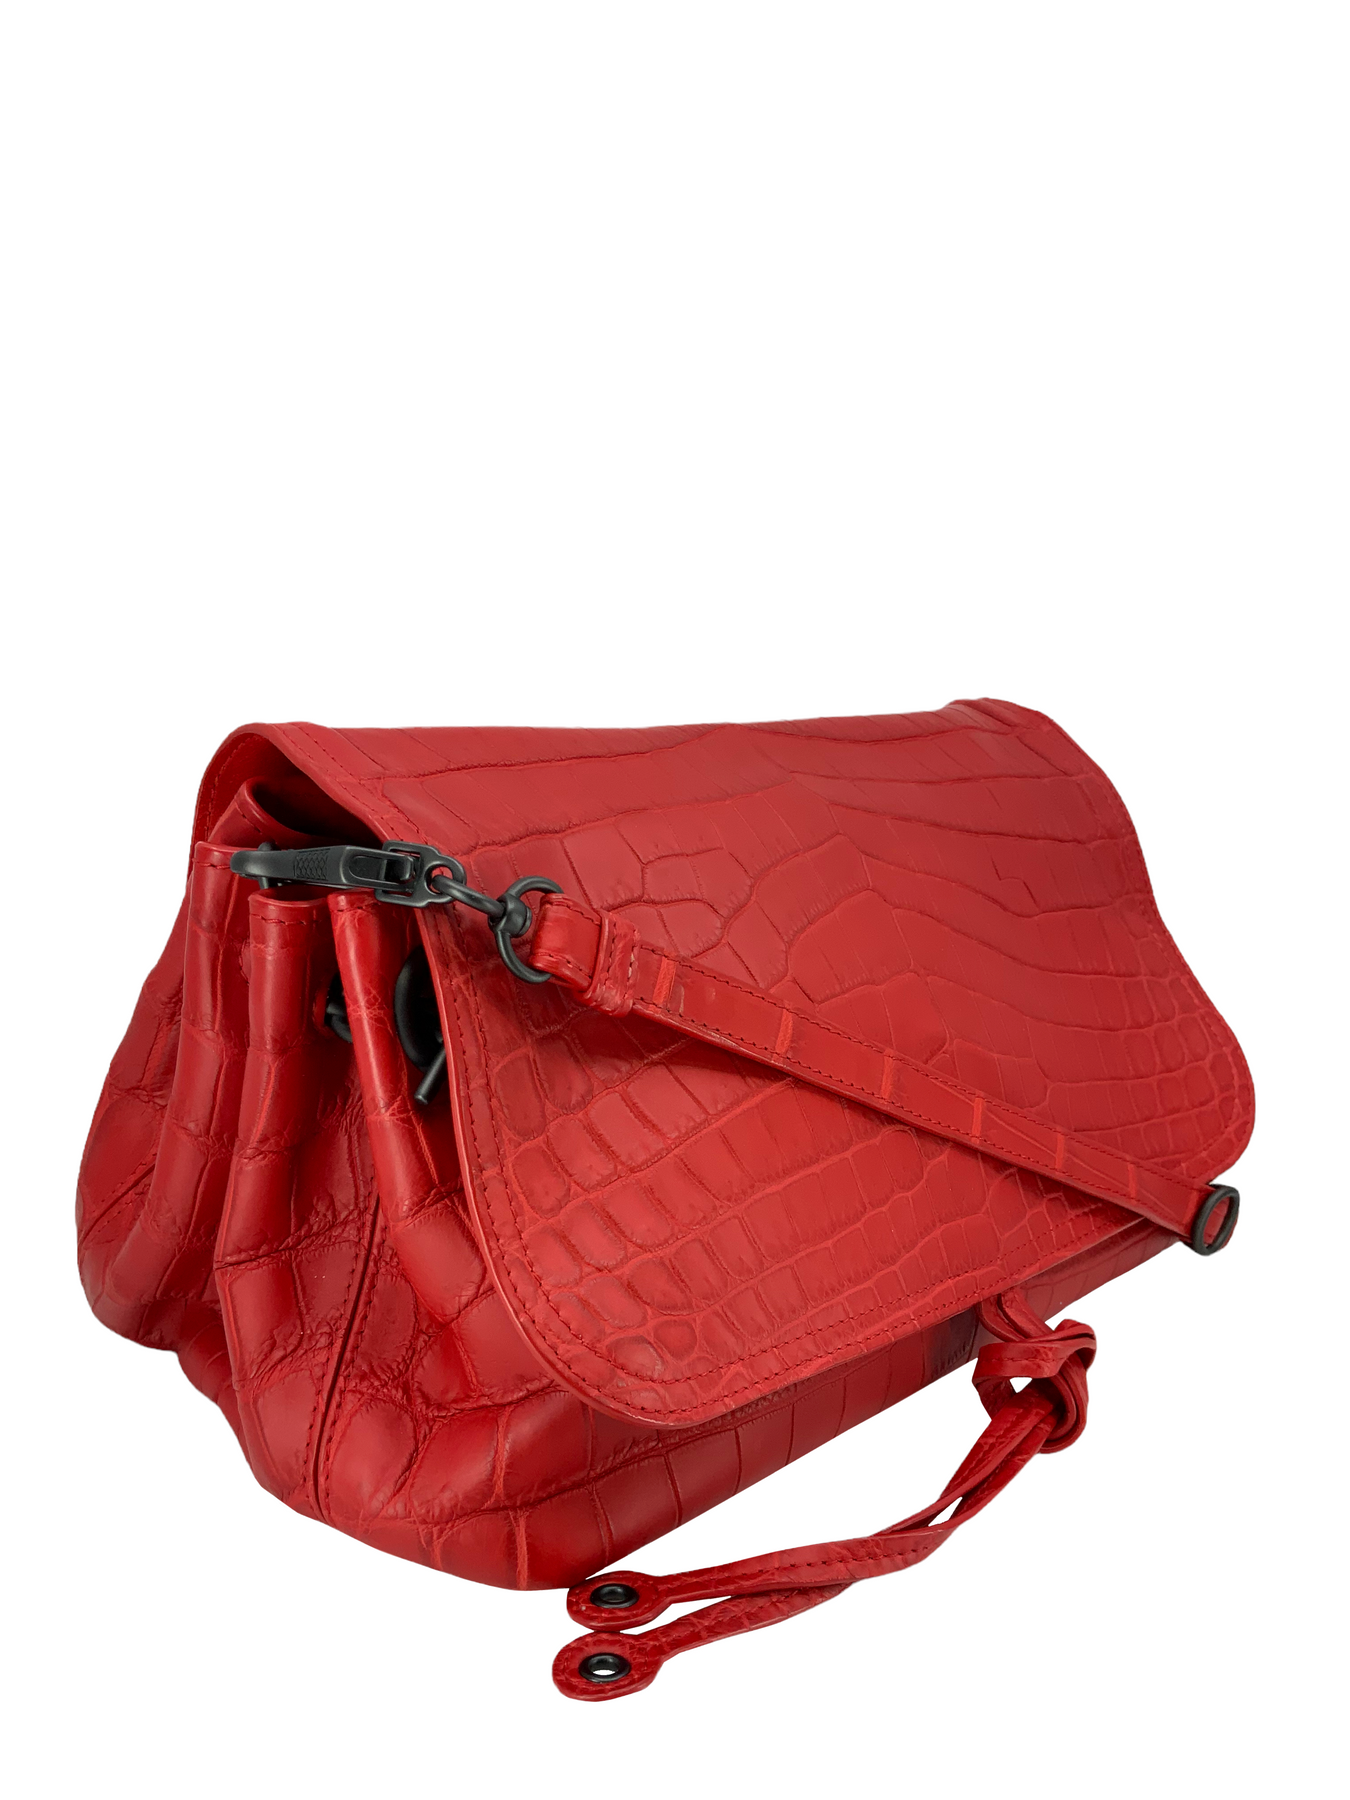 Bottega Veneta Crocodile Large Flap Bag with Shoulder Strap